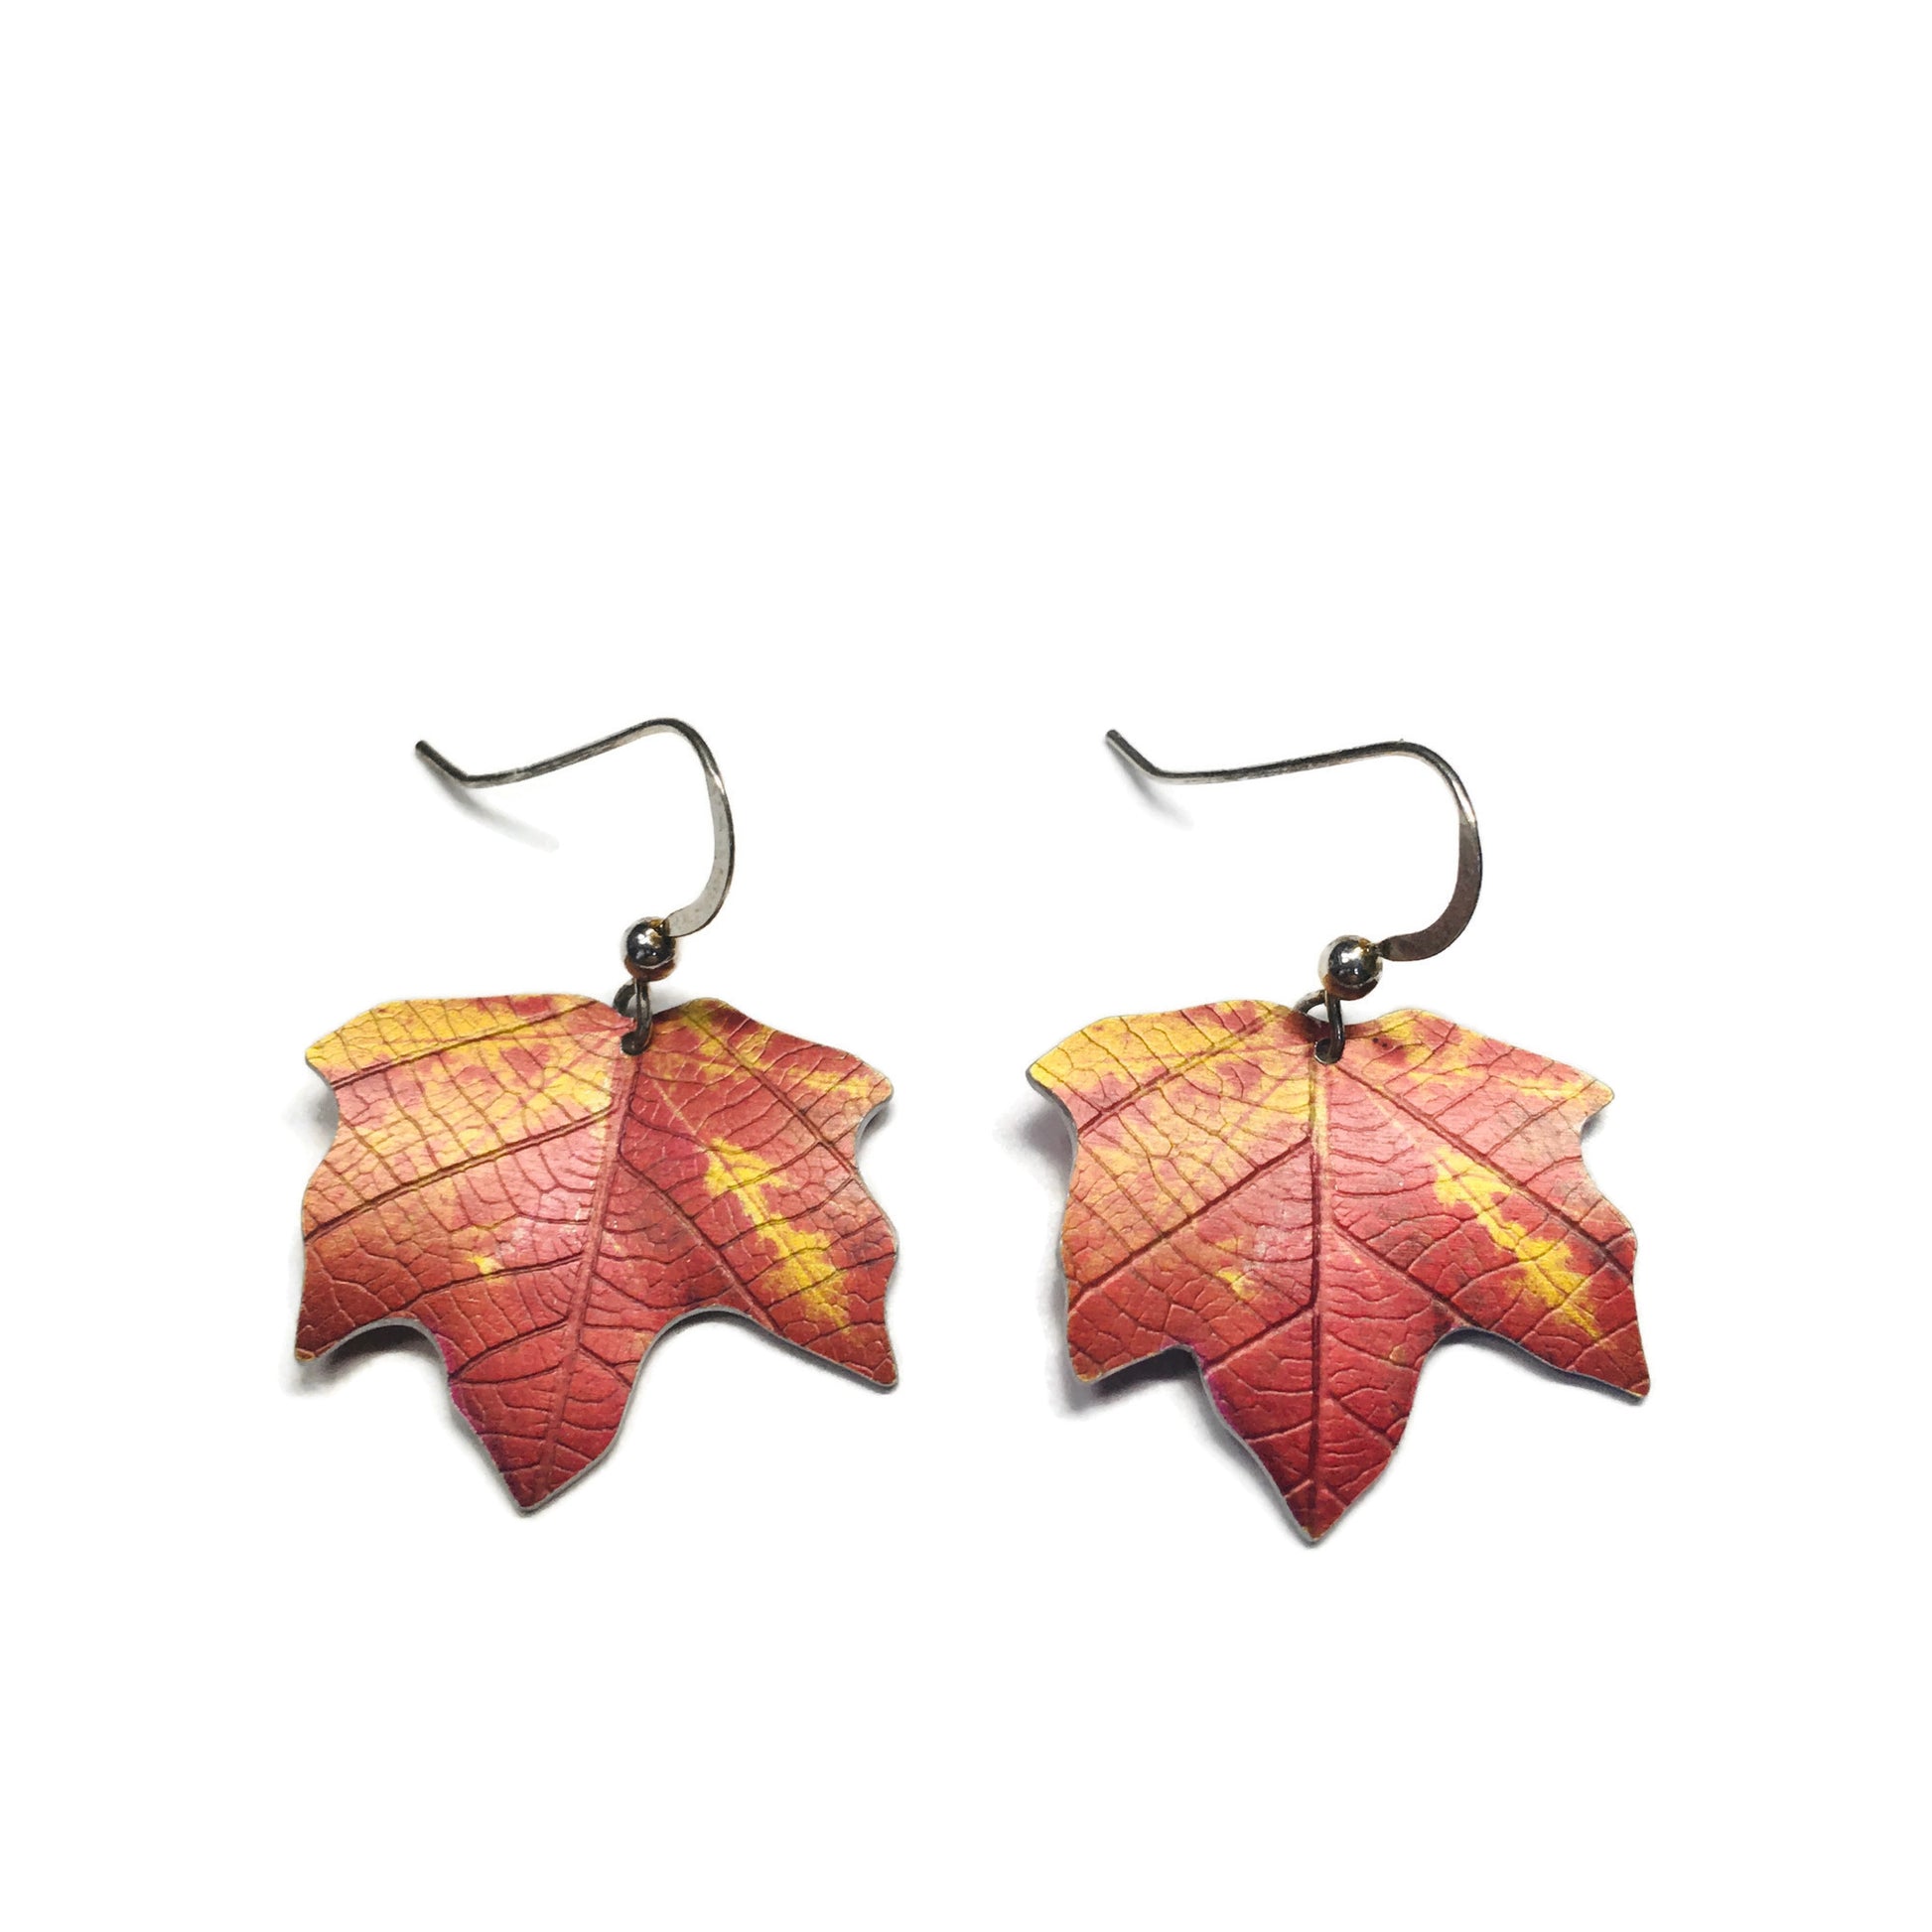 Winkworth Maple leaf earrings by Photofinish Jewellery